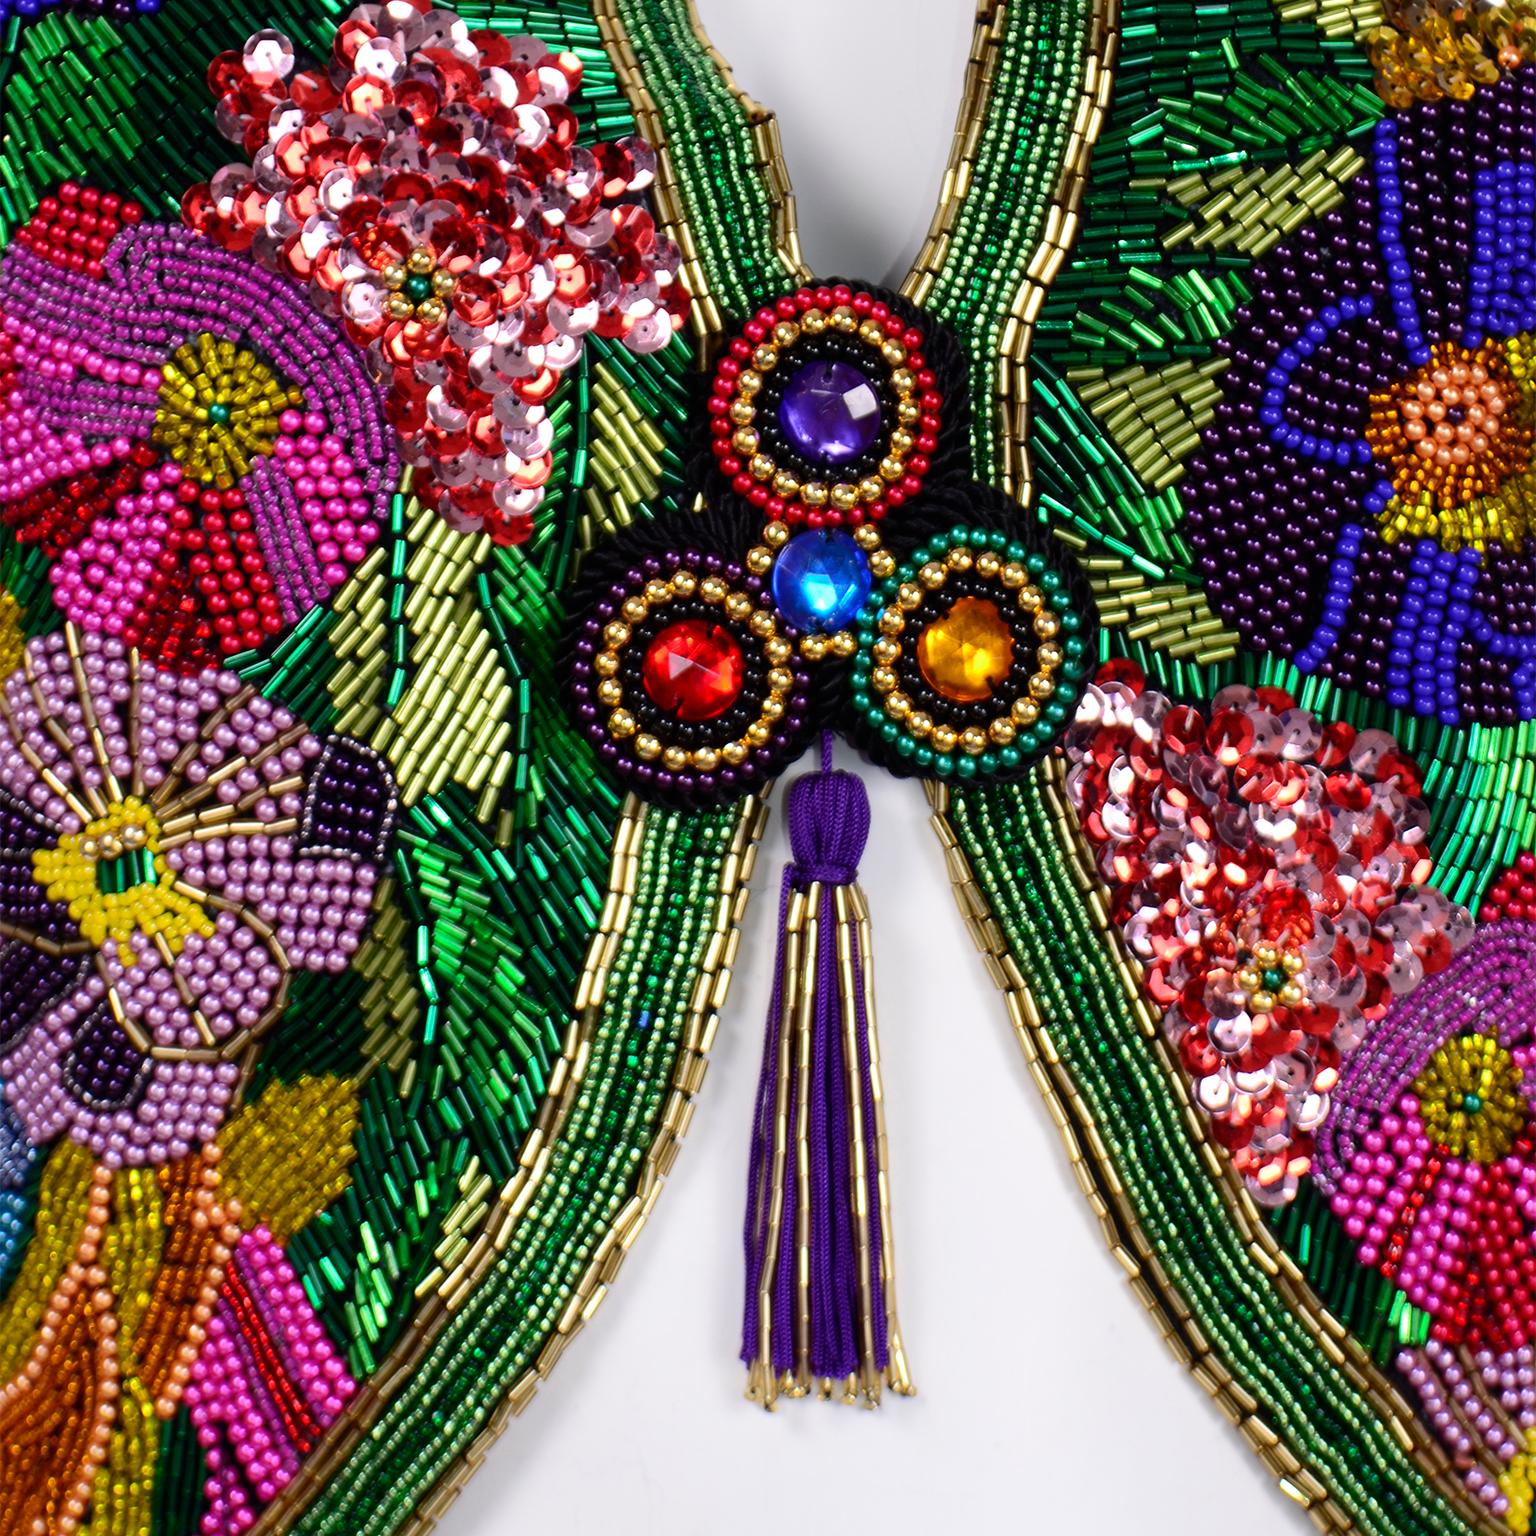 Black Diane Freis Vintage Heavily Beaded Colorful Floral Cropped Evening Bolero Jacket